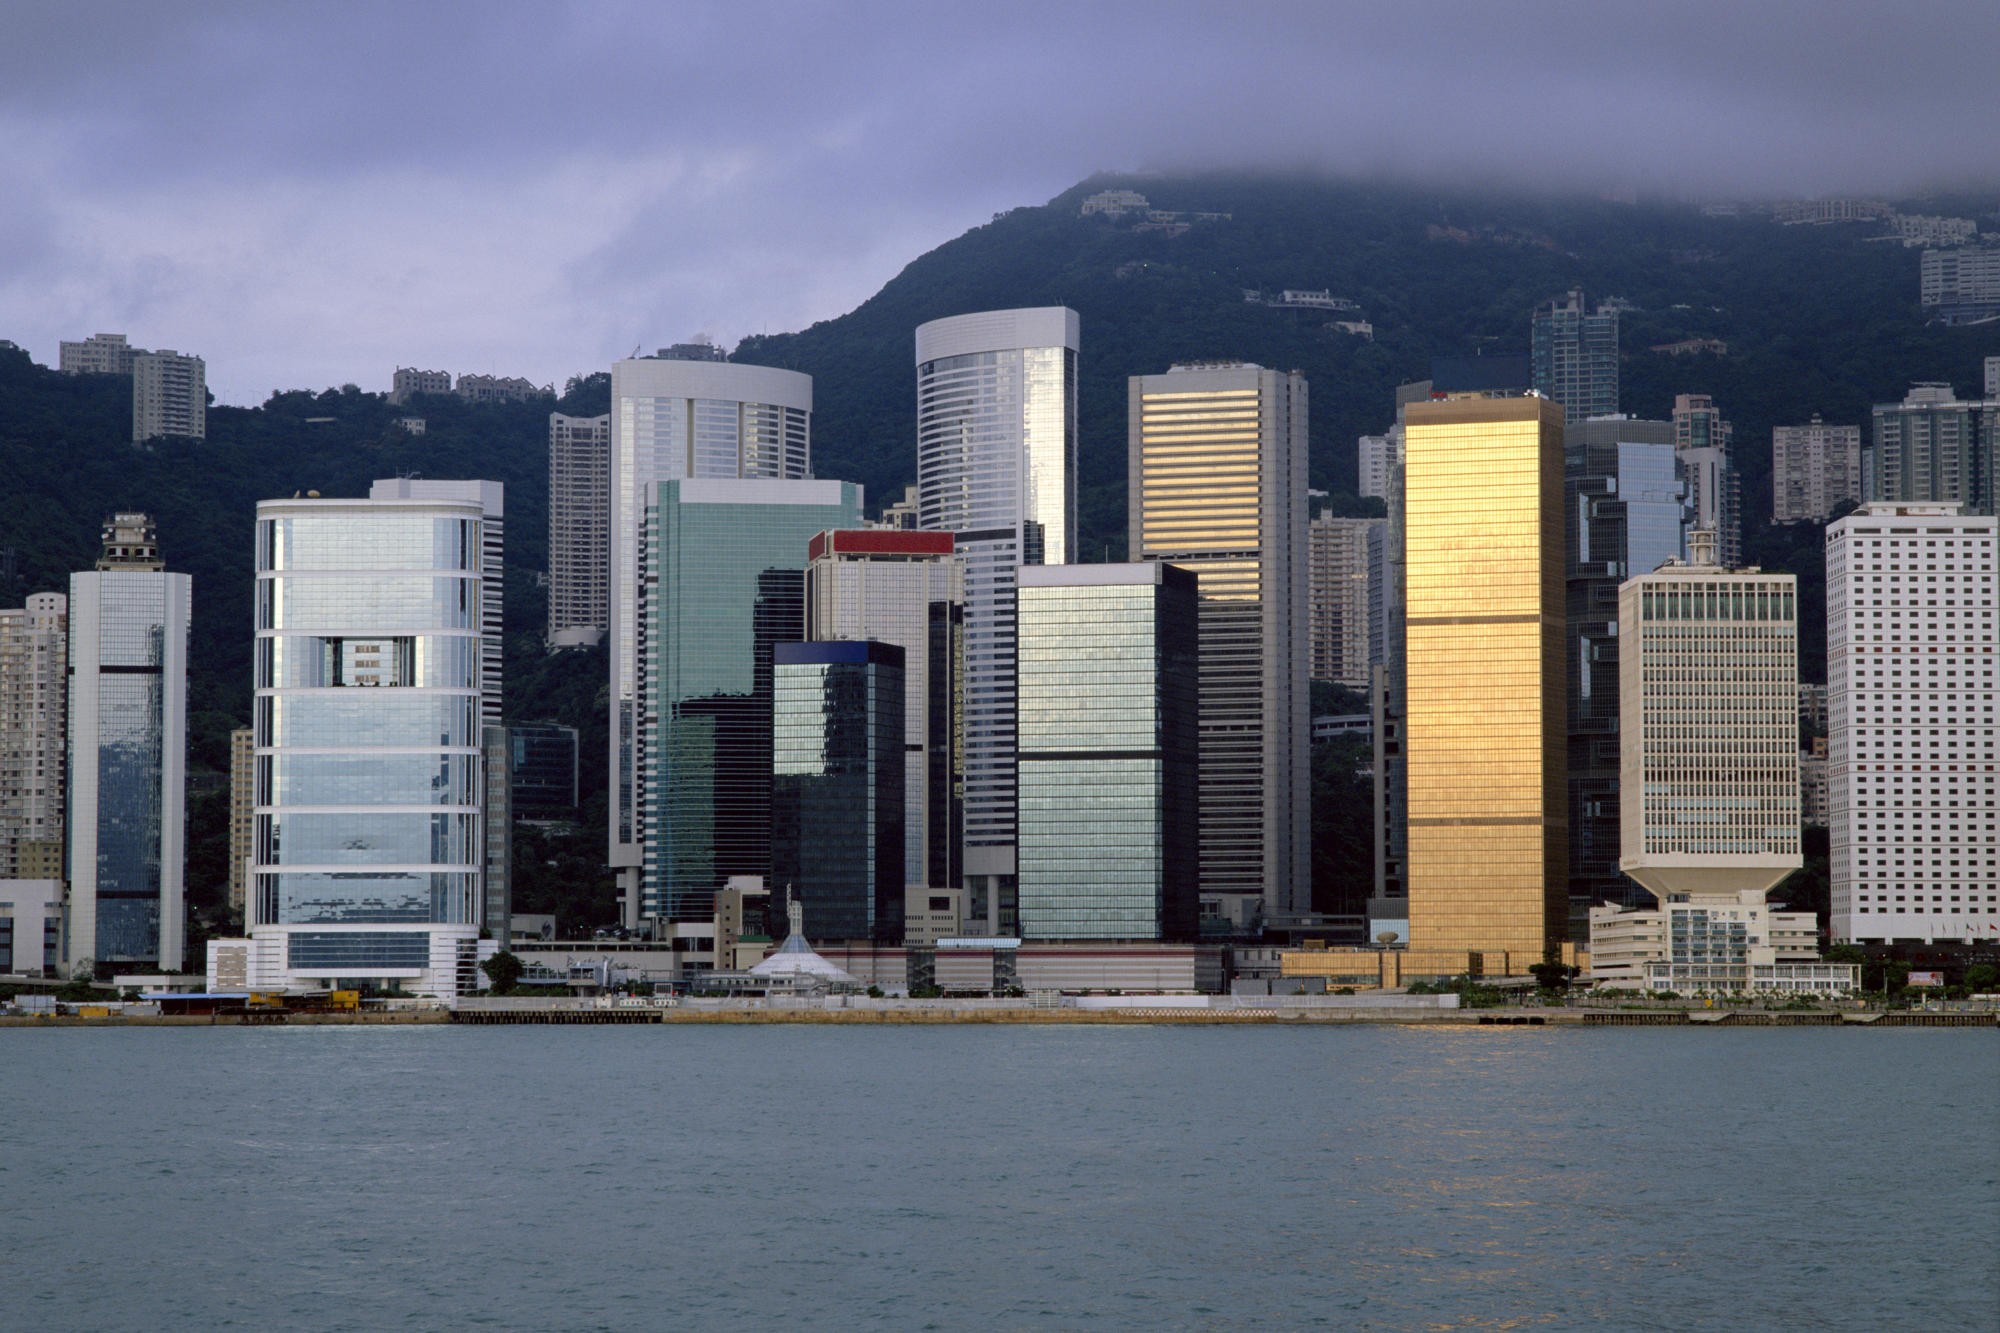 General 2000x1333 sea water photography urban city cityscape building skyscraper hills Hong Kong China Asia